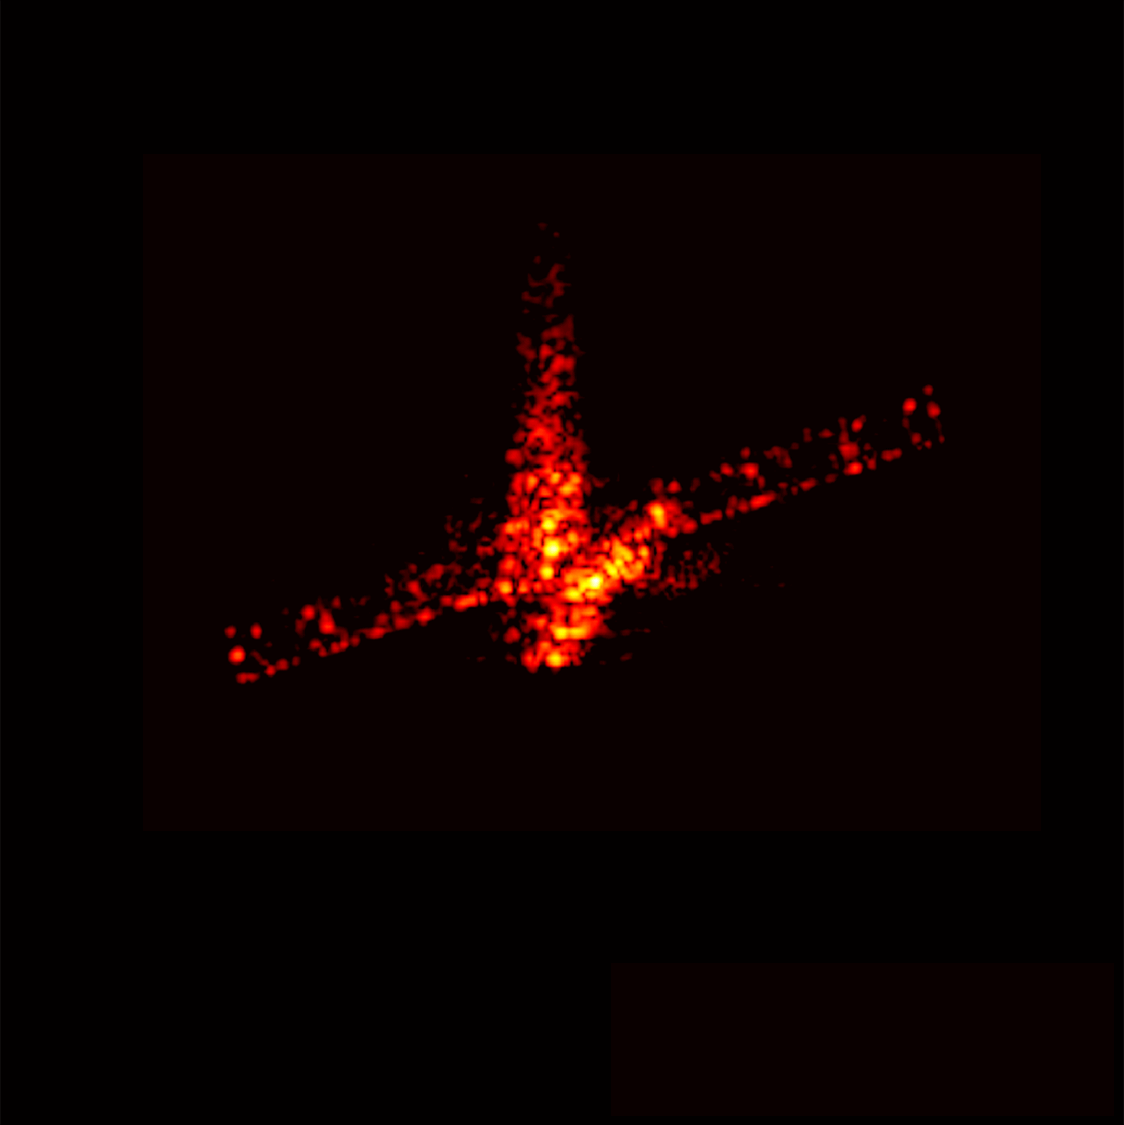 Satellite Reentry Flaming Animation